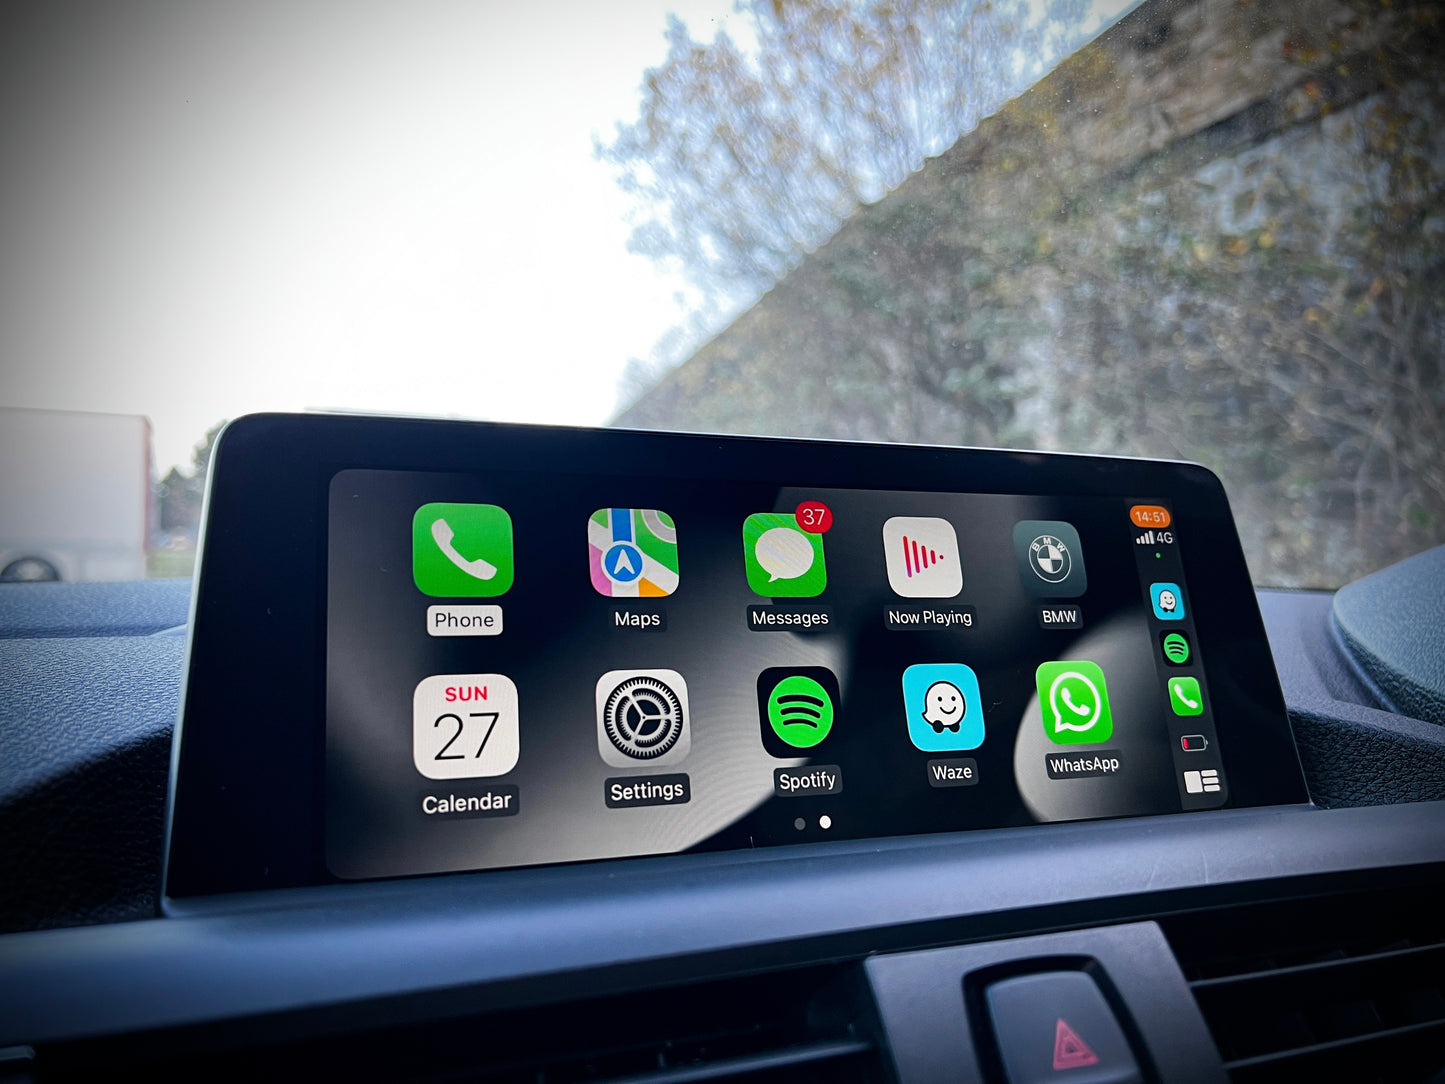 Fullscreen Apple CarPlay Activation